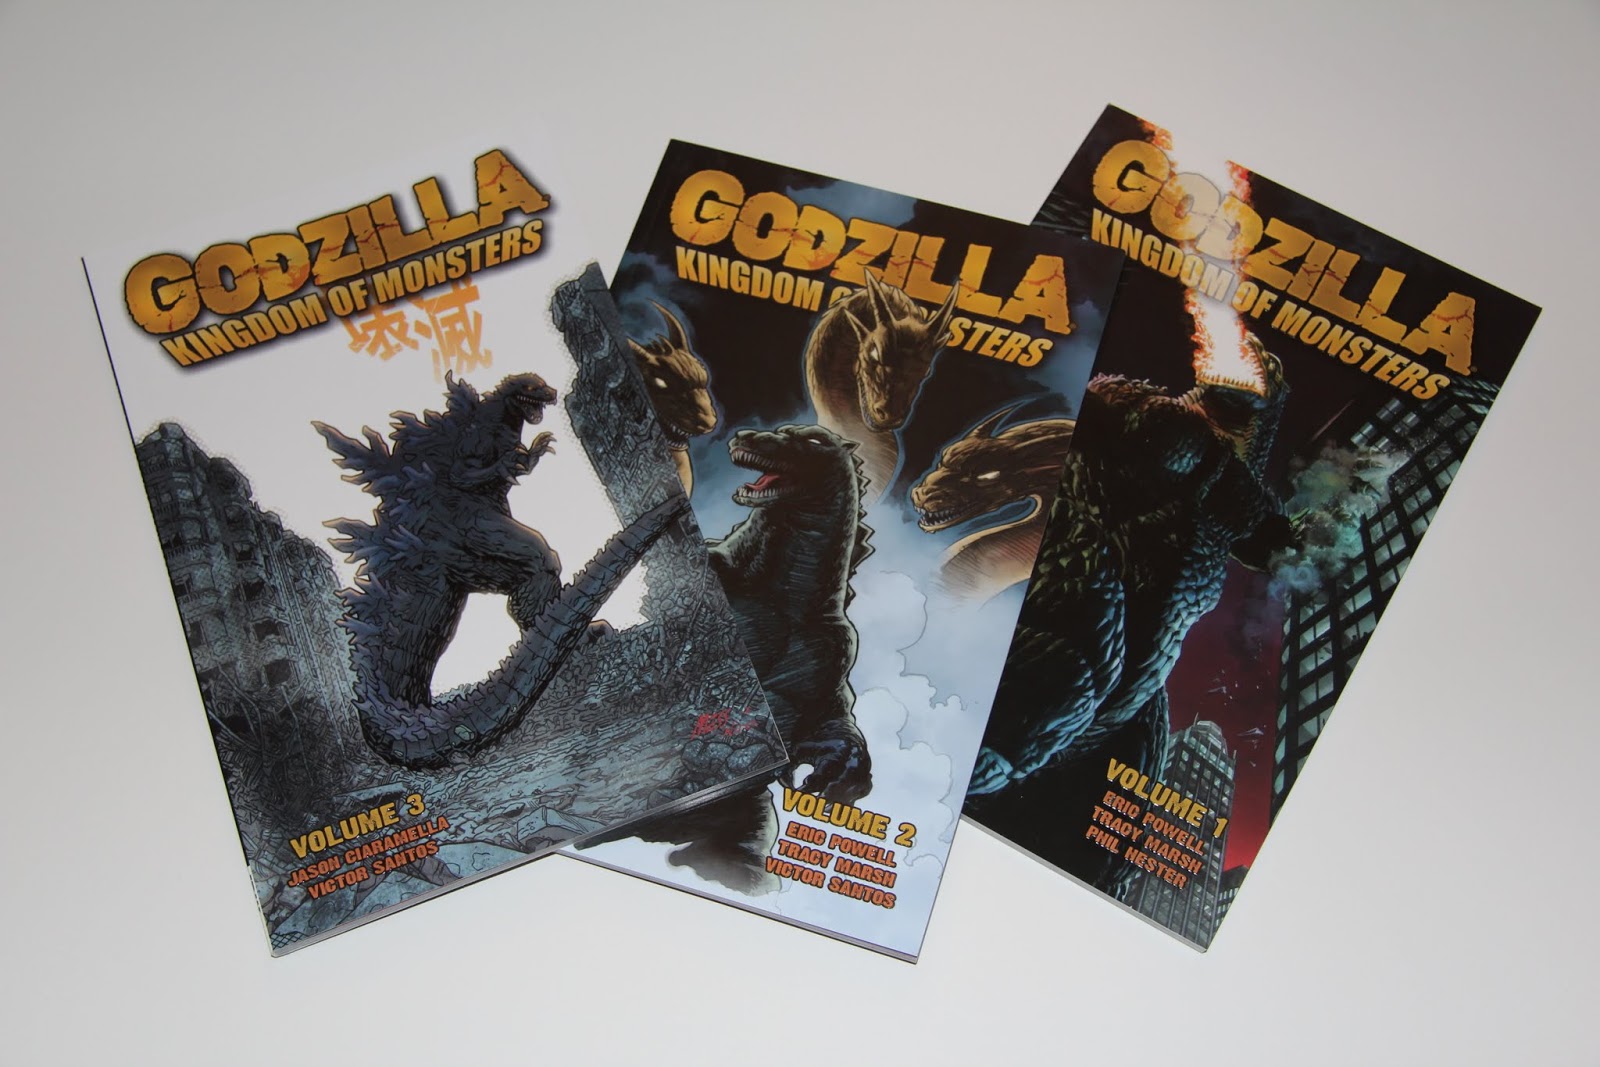 Book of Godzilla and Other Kaiju 2 - Mothra vs Godzilla Earth - Wattpad